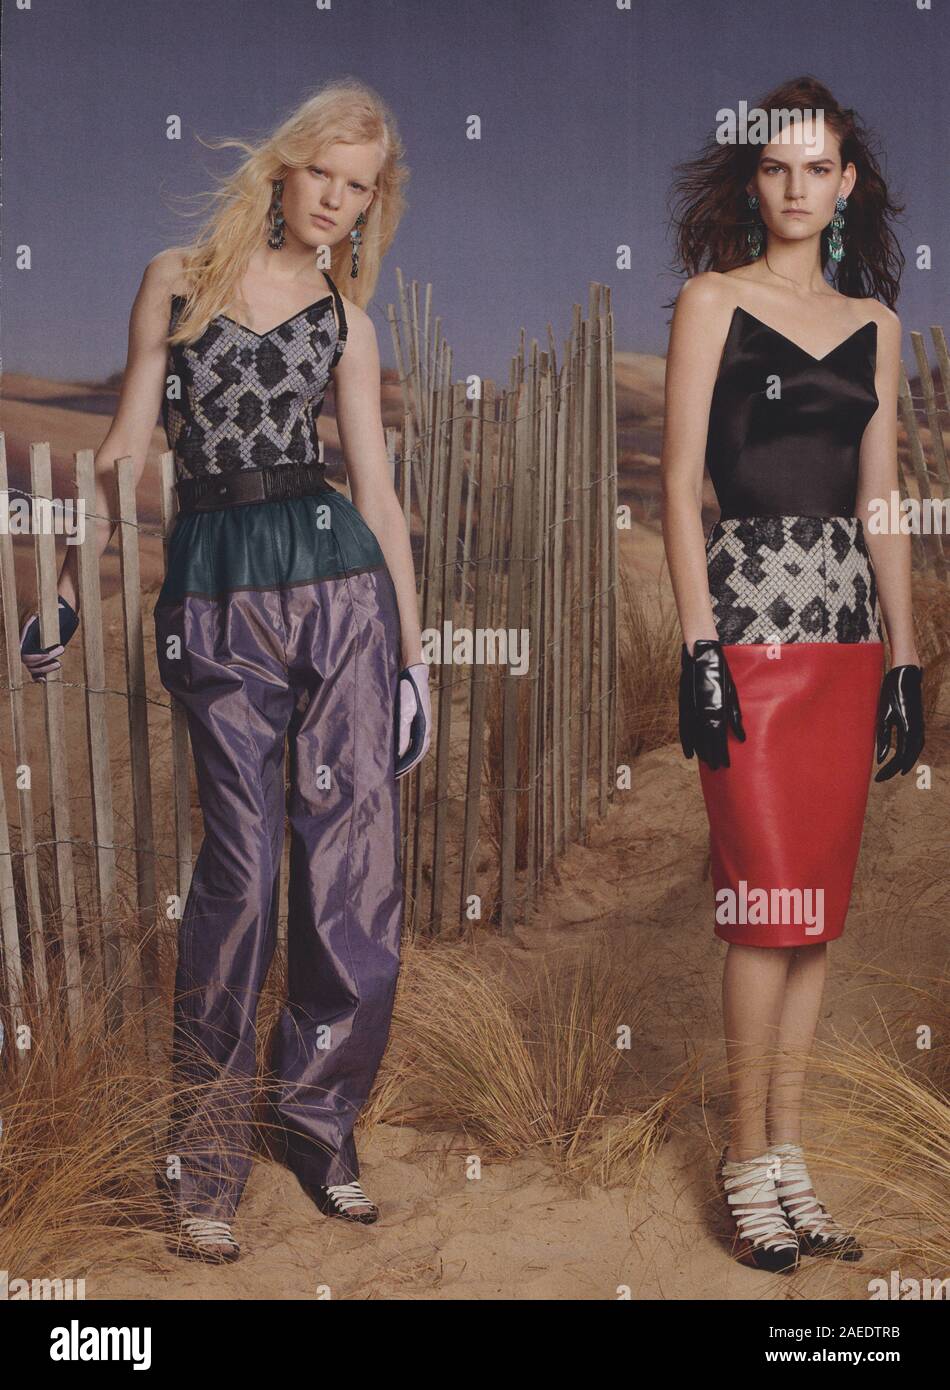 poster advertising Balenciaga fashion house in paper magazine from 2012  year, advertisement, creative Balenciaga 2010s advert Stock Photo - Alamy